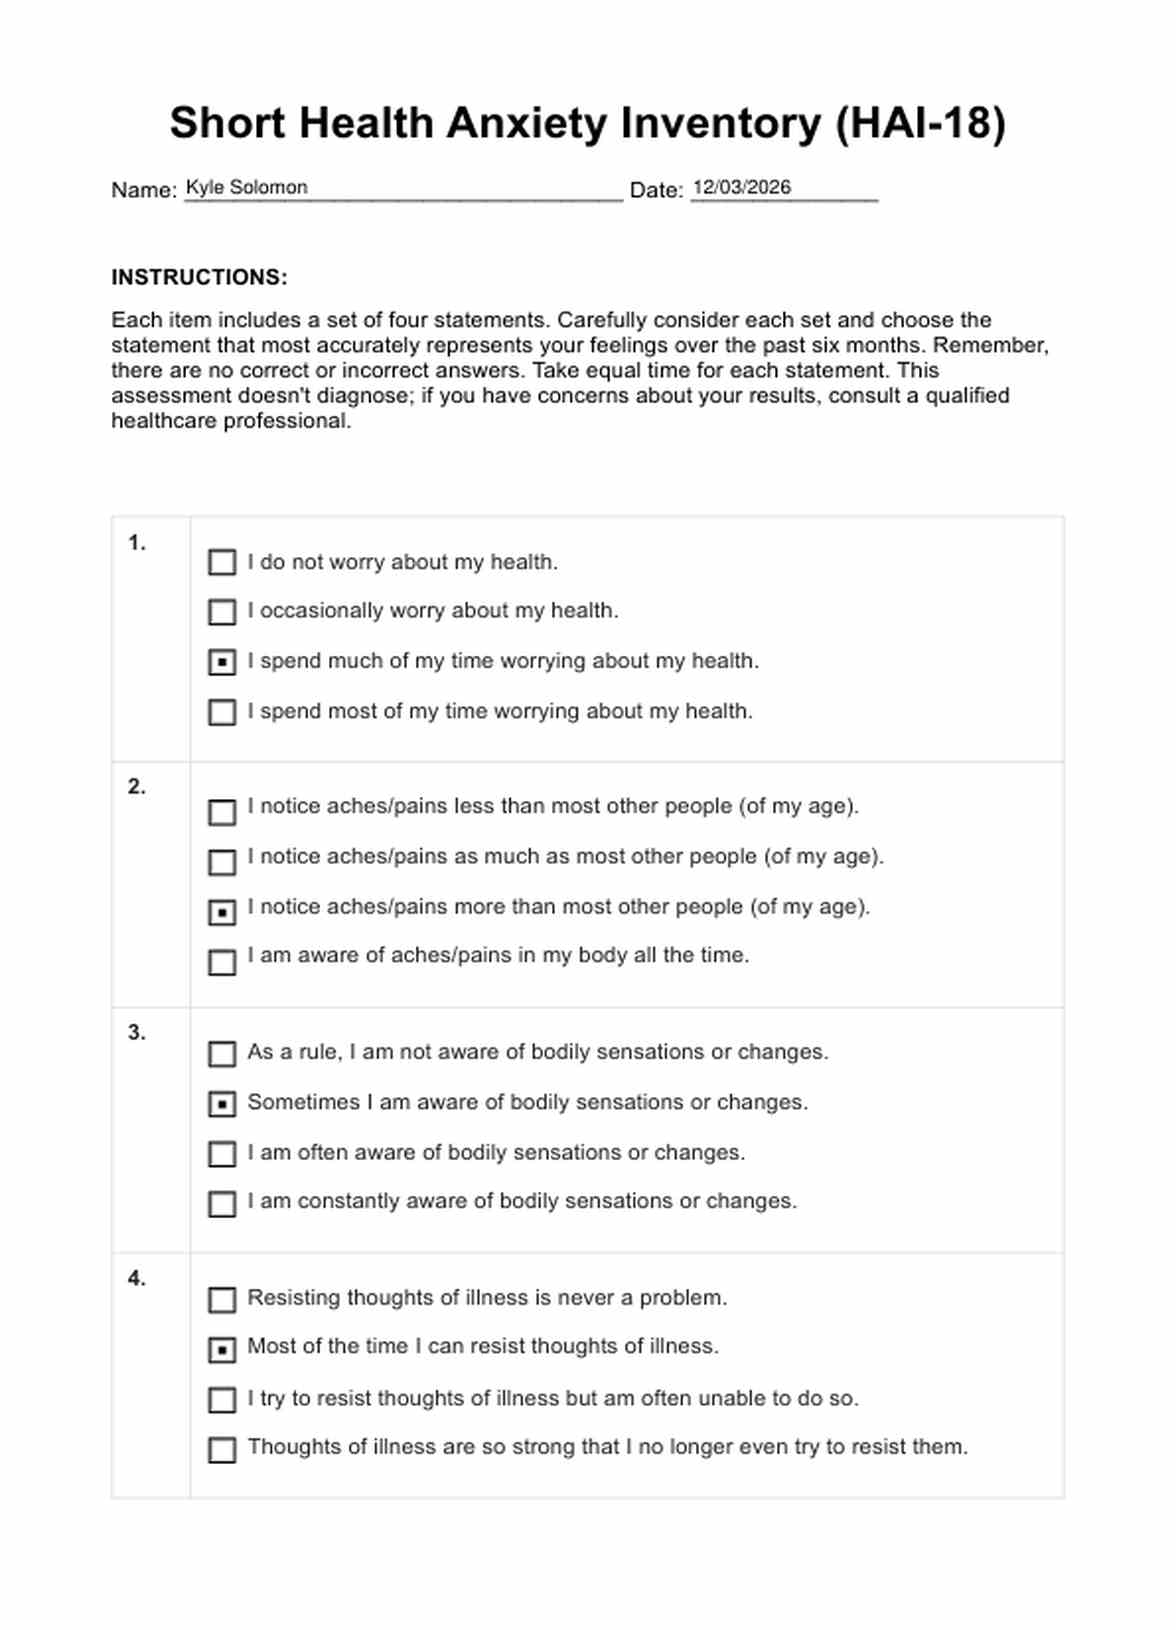 Short Health Anxiety Inventory (HAI-18) PDF Example